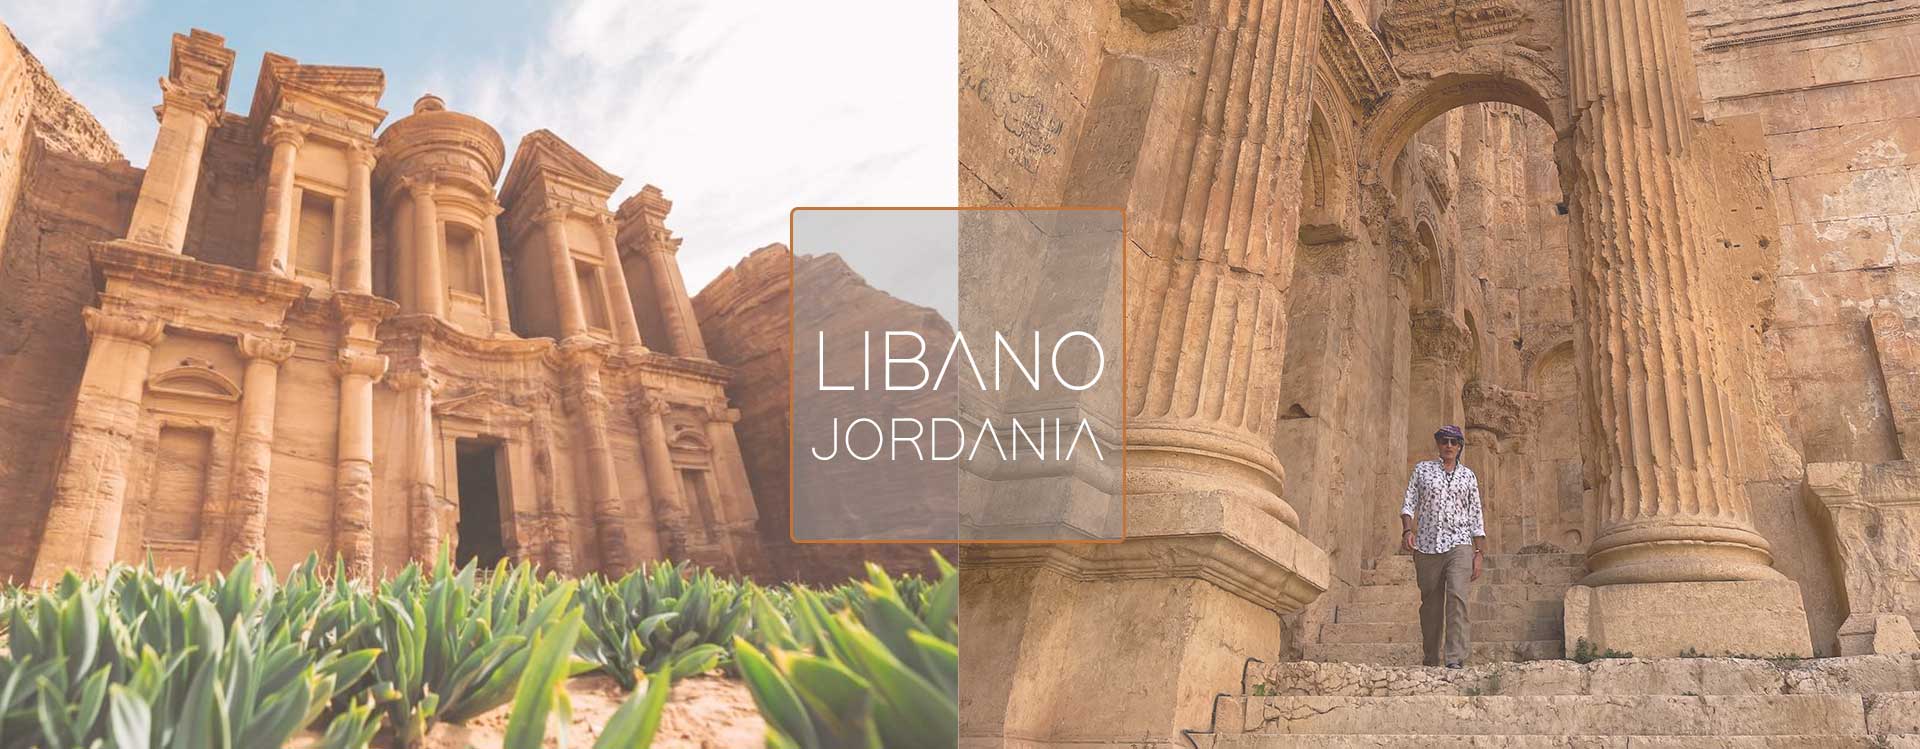 libano-jordania-imagen-middle